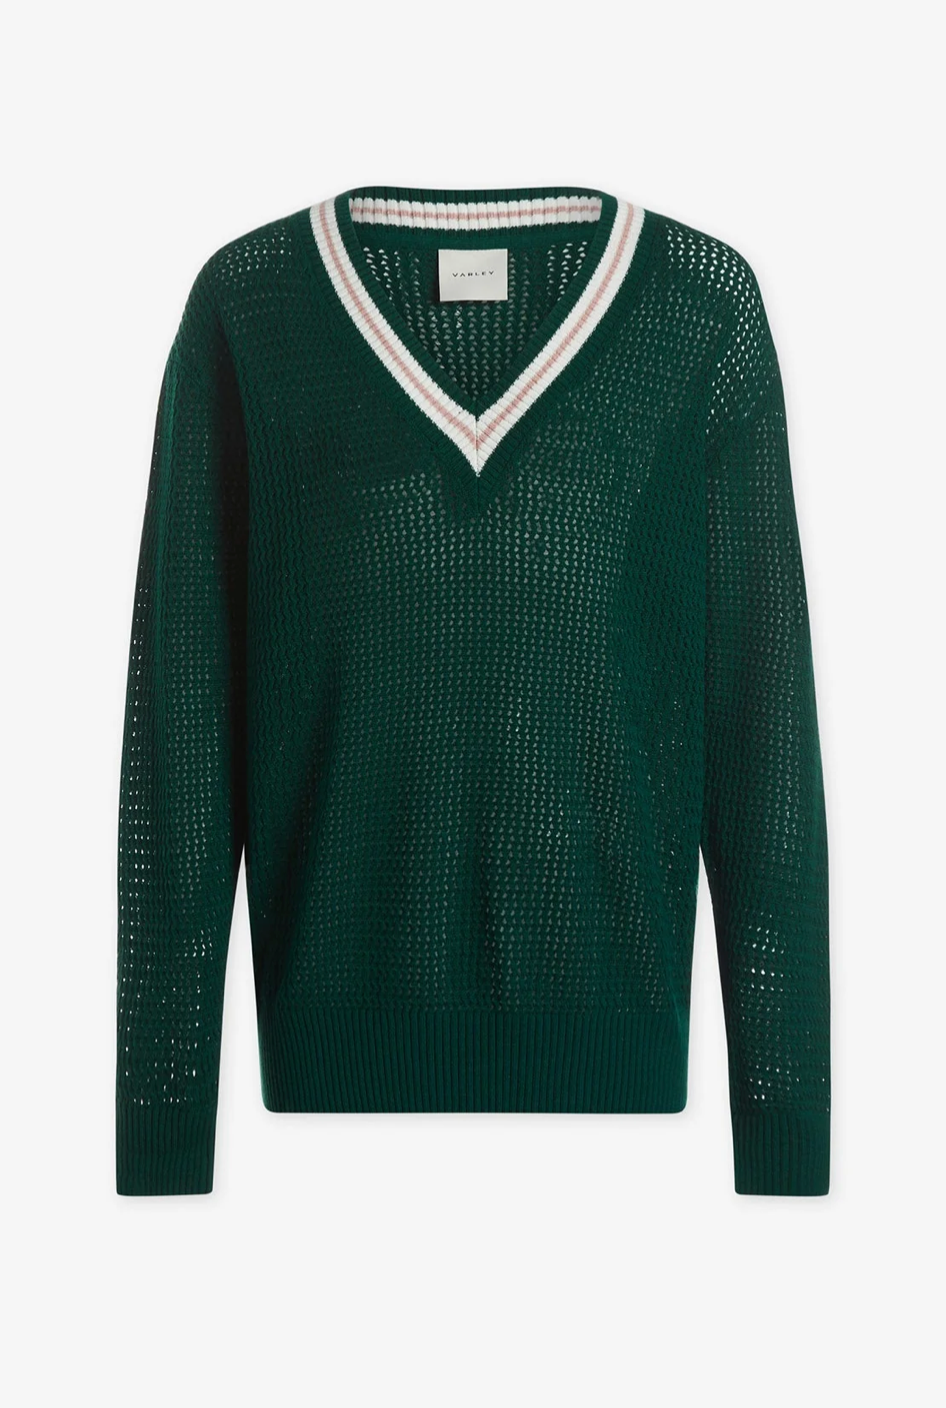 Hadley Knit Sweater- Forest Green